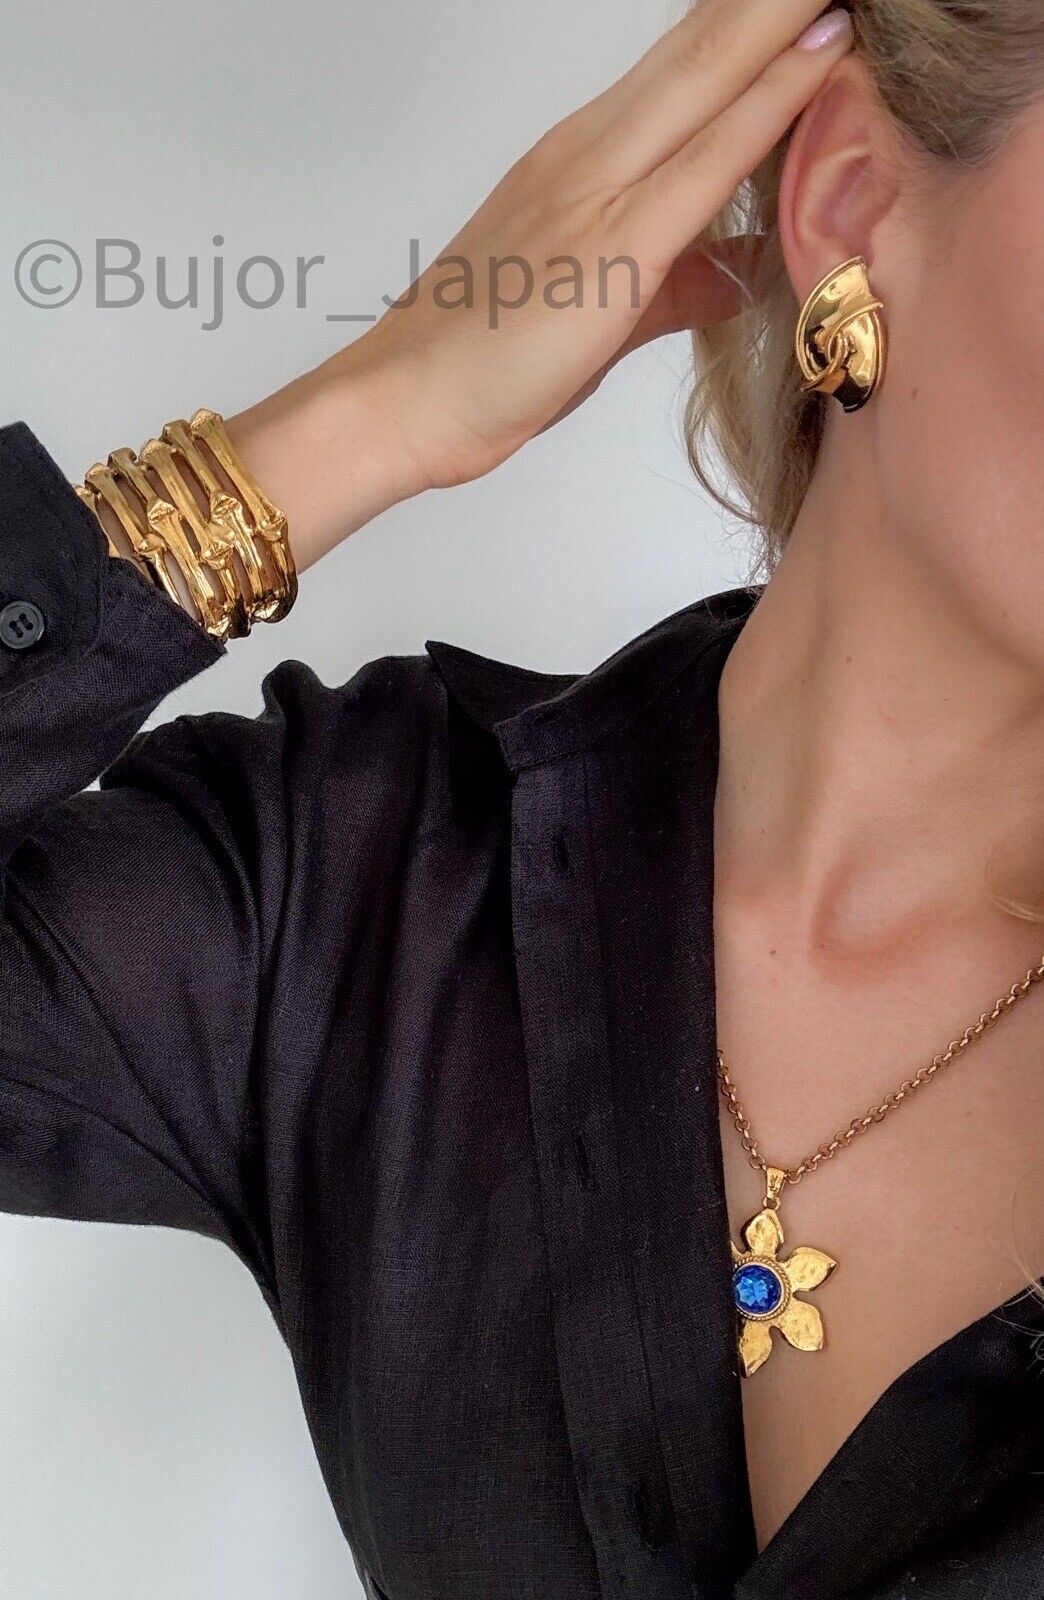 Vintage YSL Yves Saint Laurent Earrings, Gold Tone Oval Earrings , Bridal earrings, Clip-on Earrings, Earrings large gold